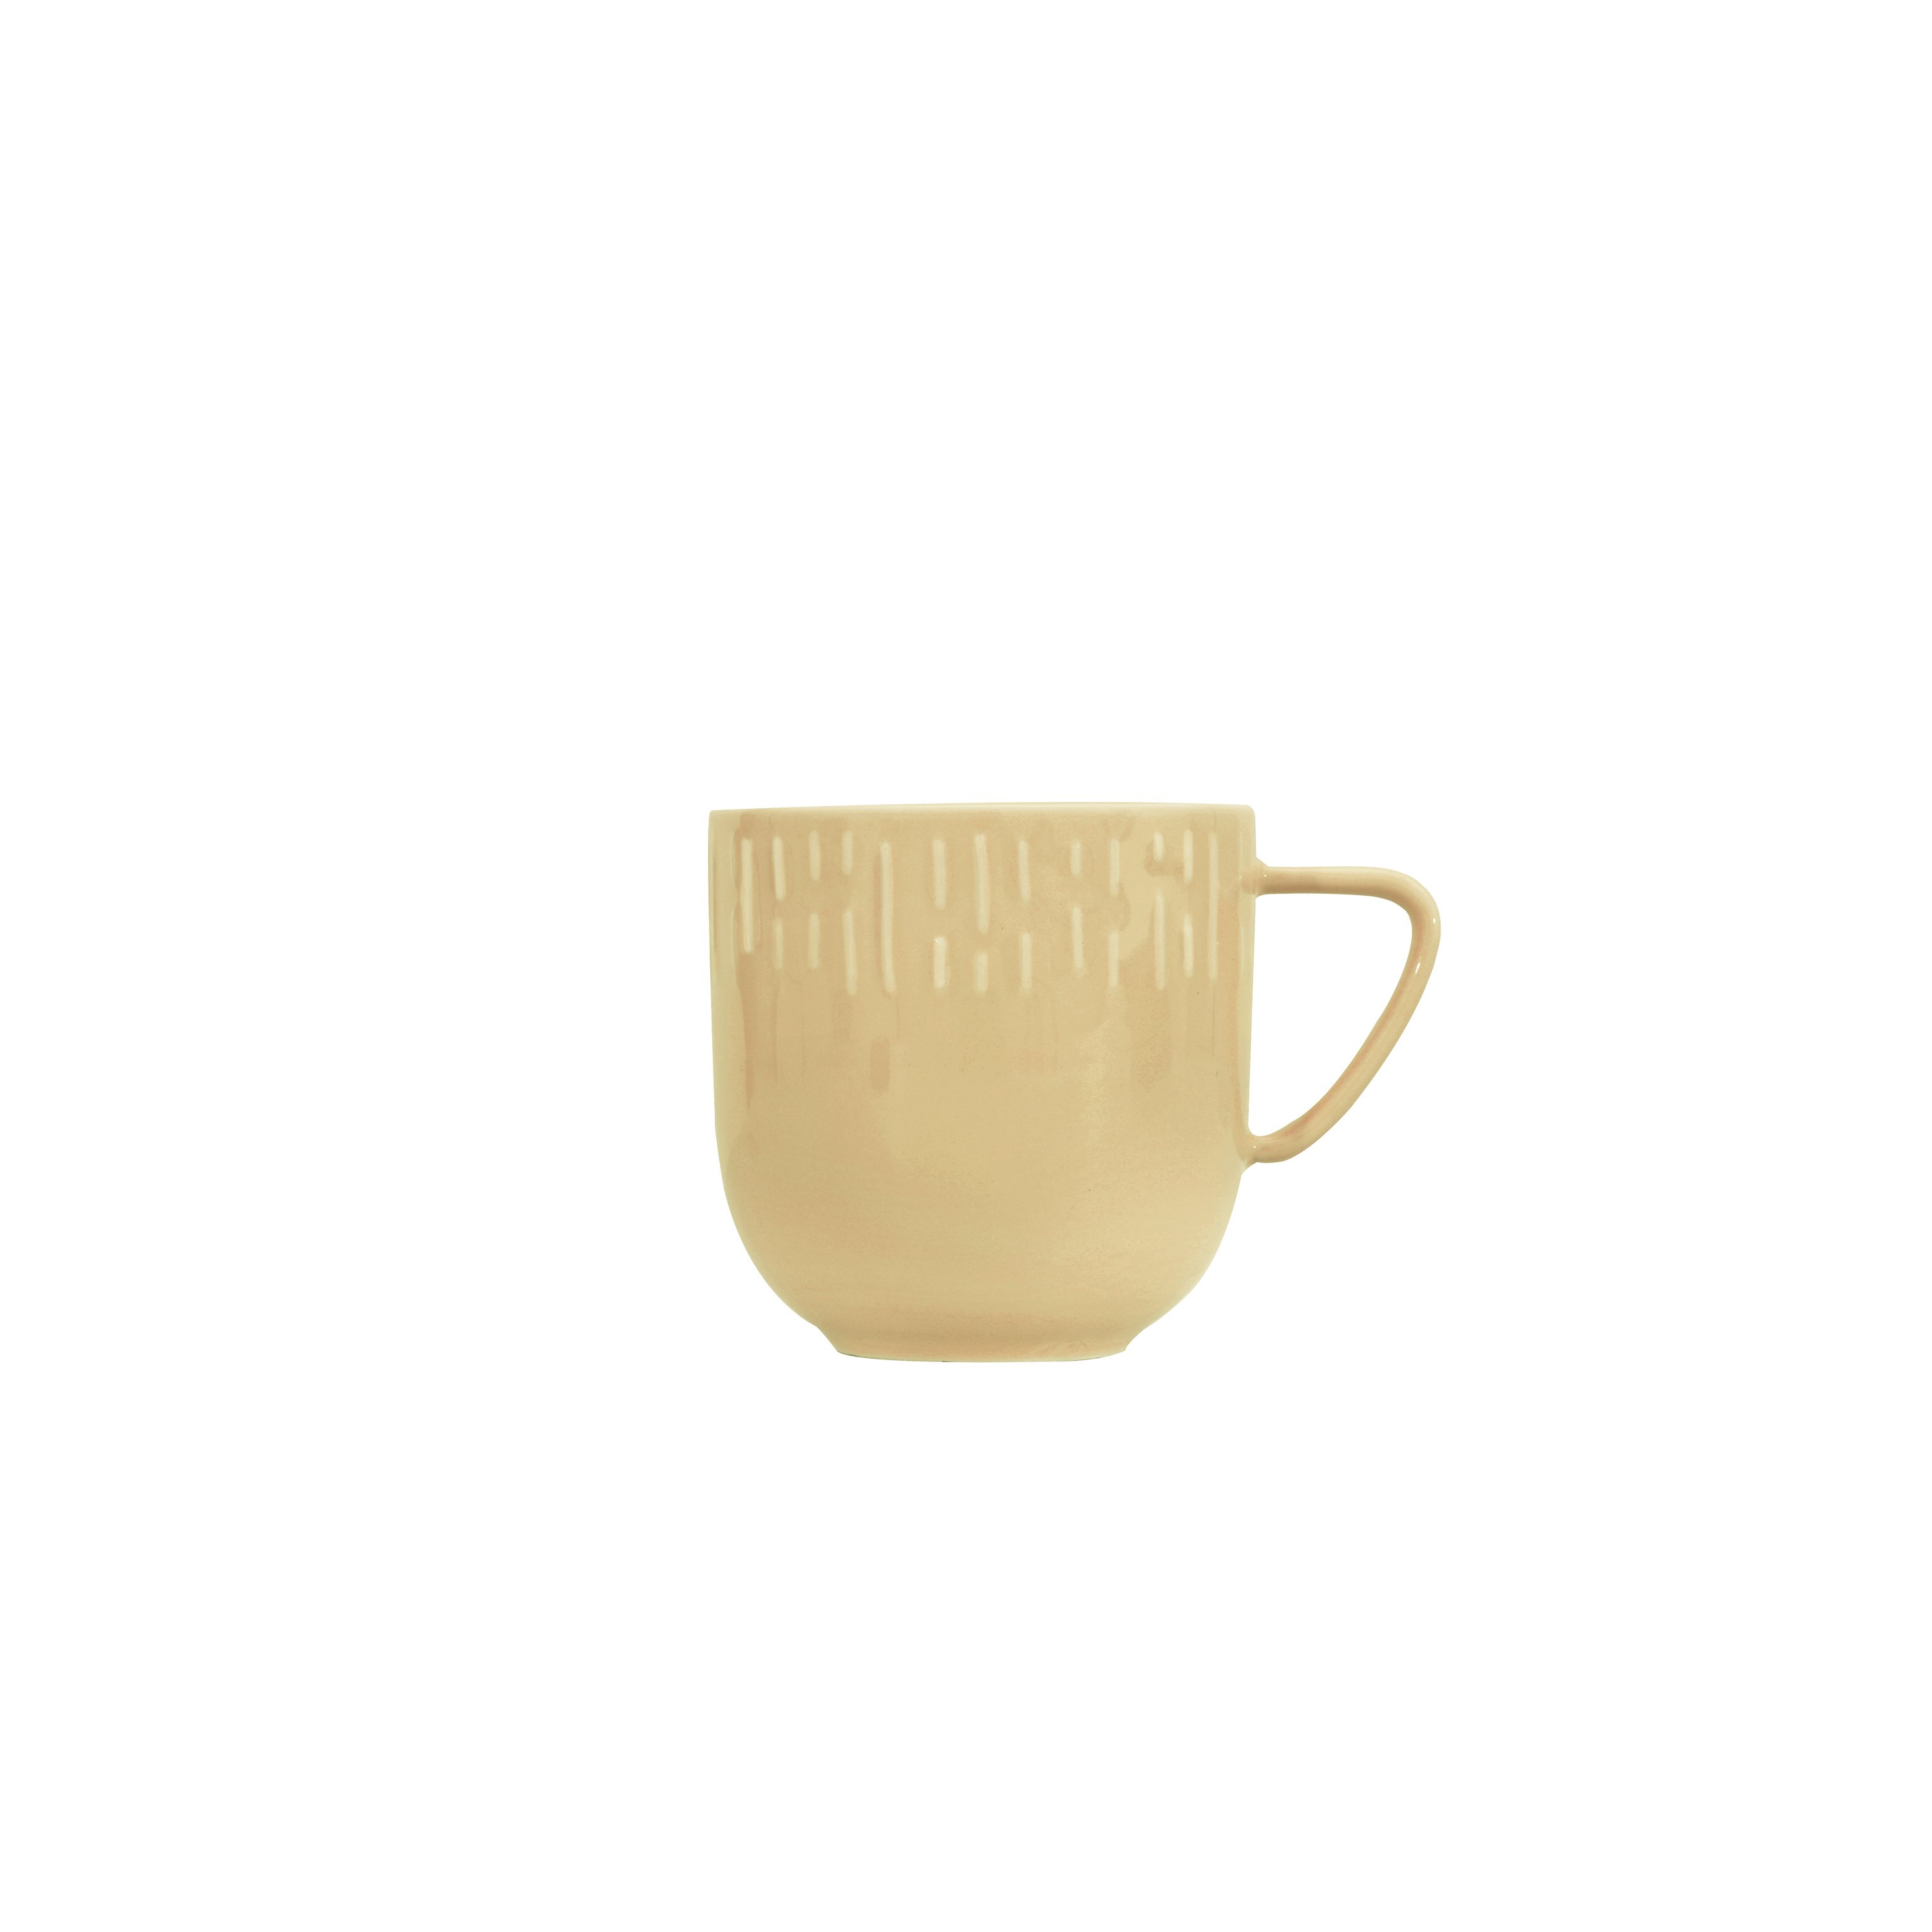 Aida - Life in Colour - Confetti - Mustard mug w/relief porcelain (13381)